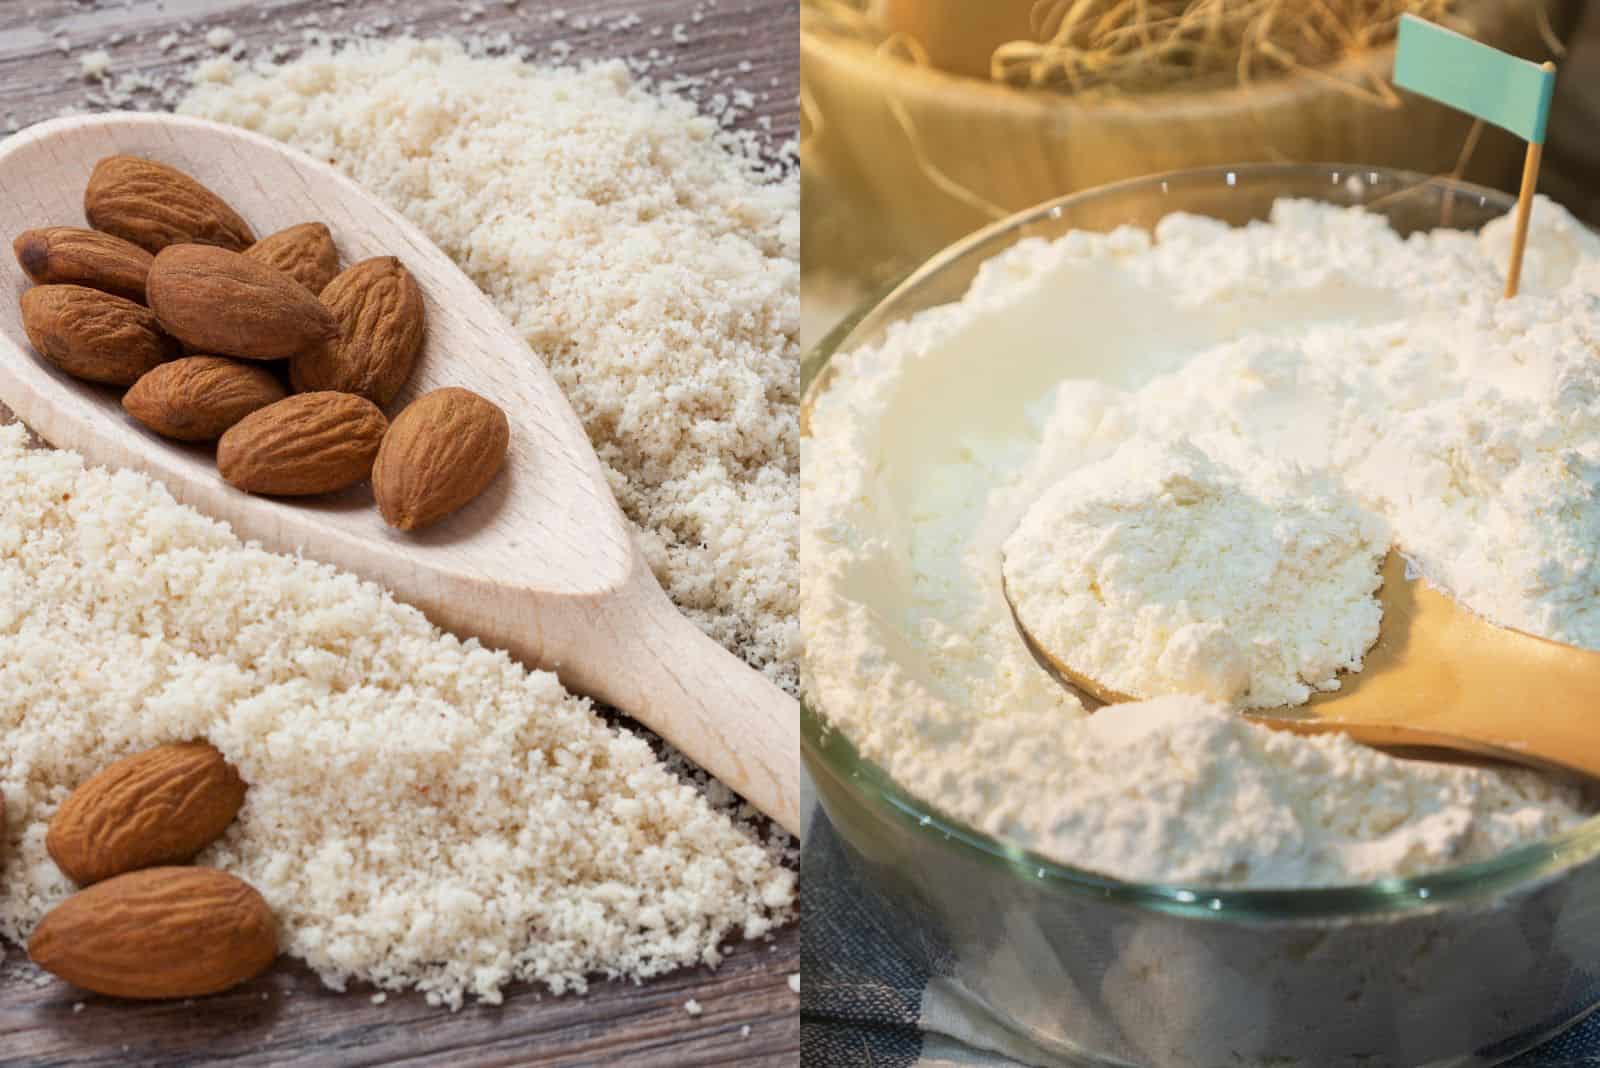 almond flour on the table and plain flour in a bowl